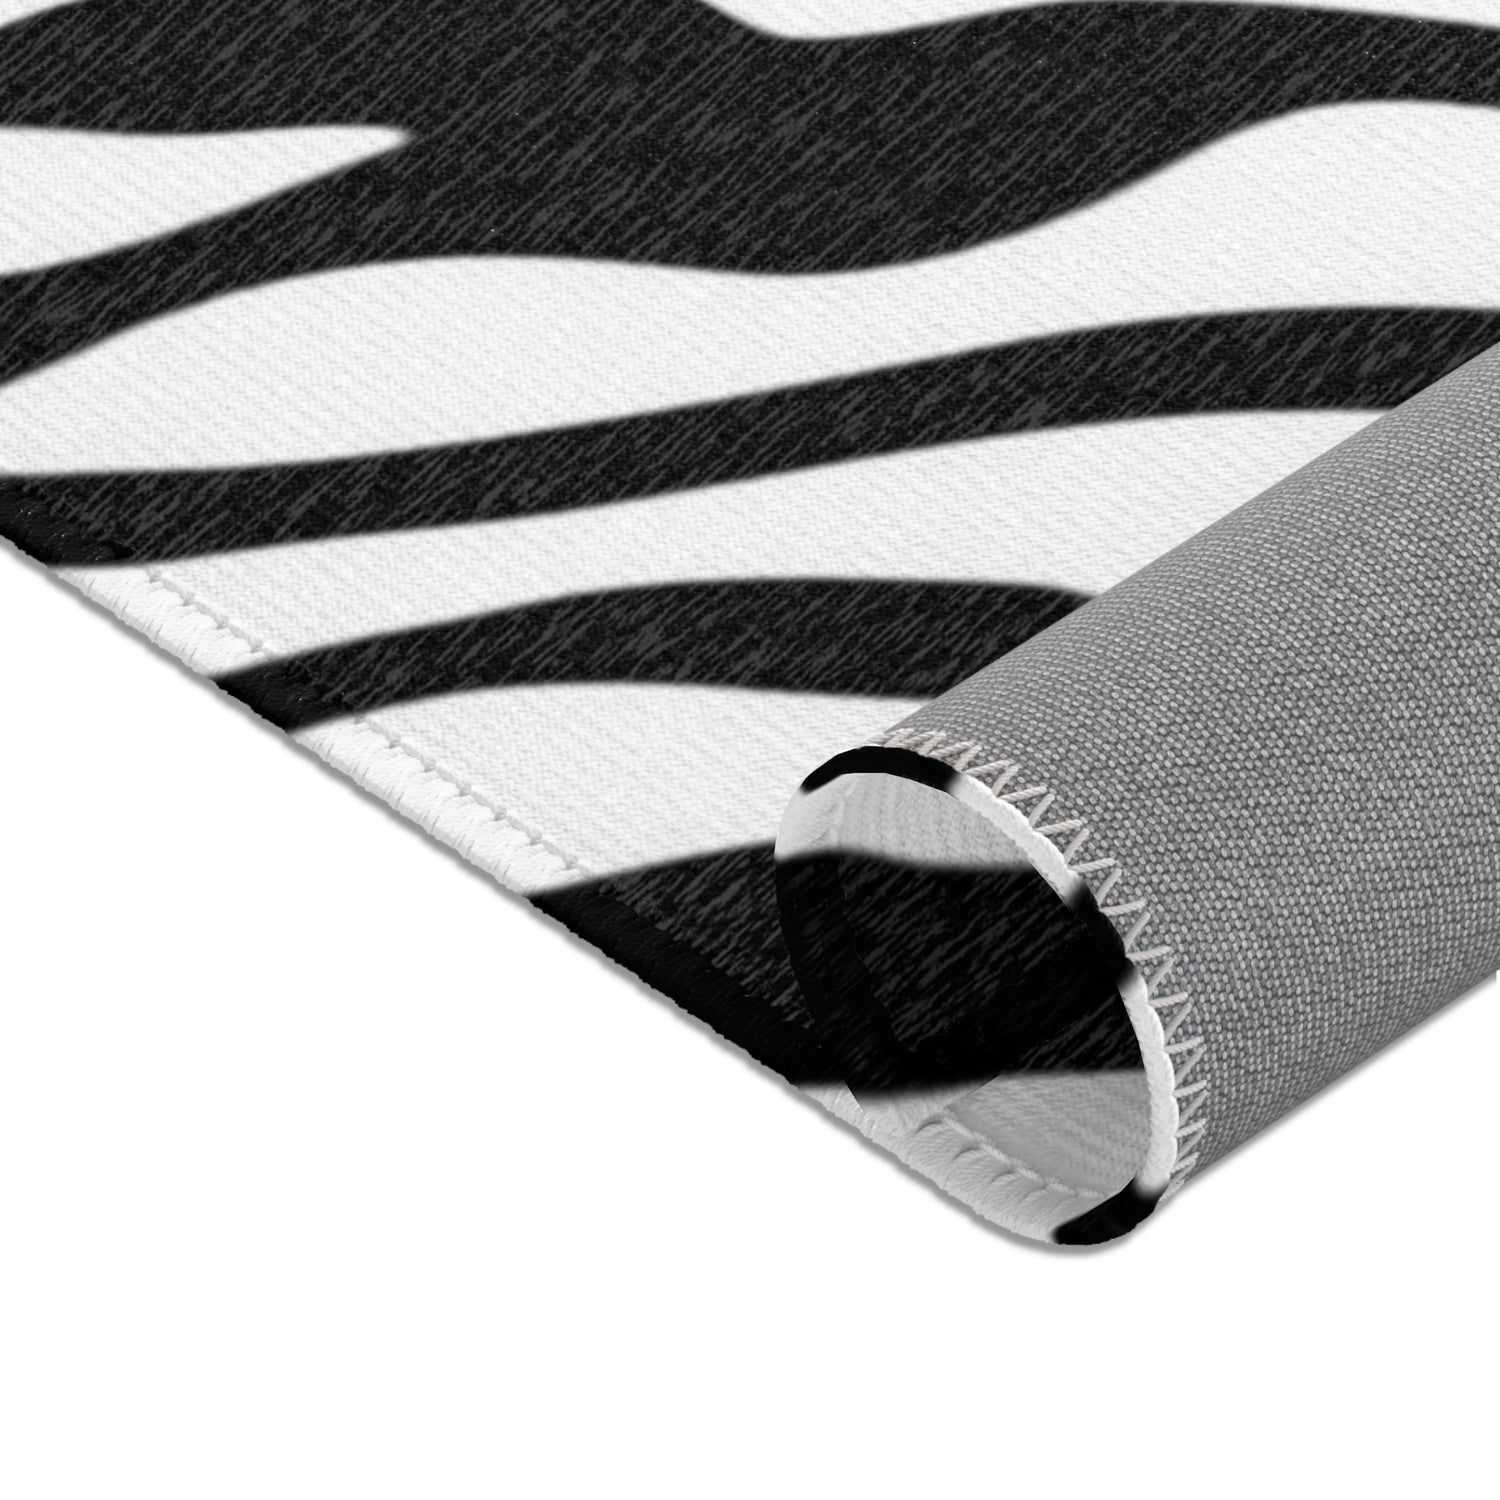 Area Rugs Zebra print